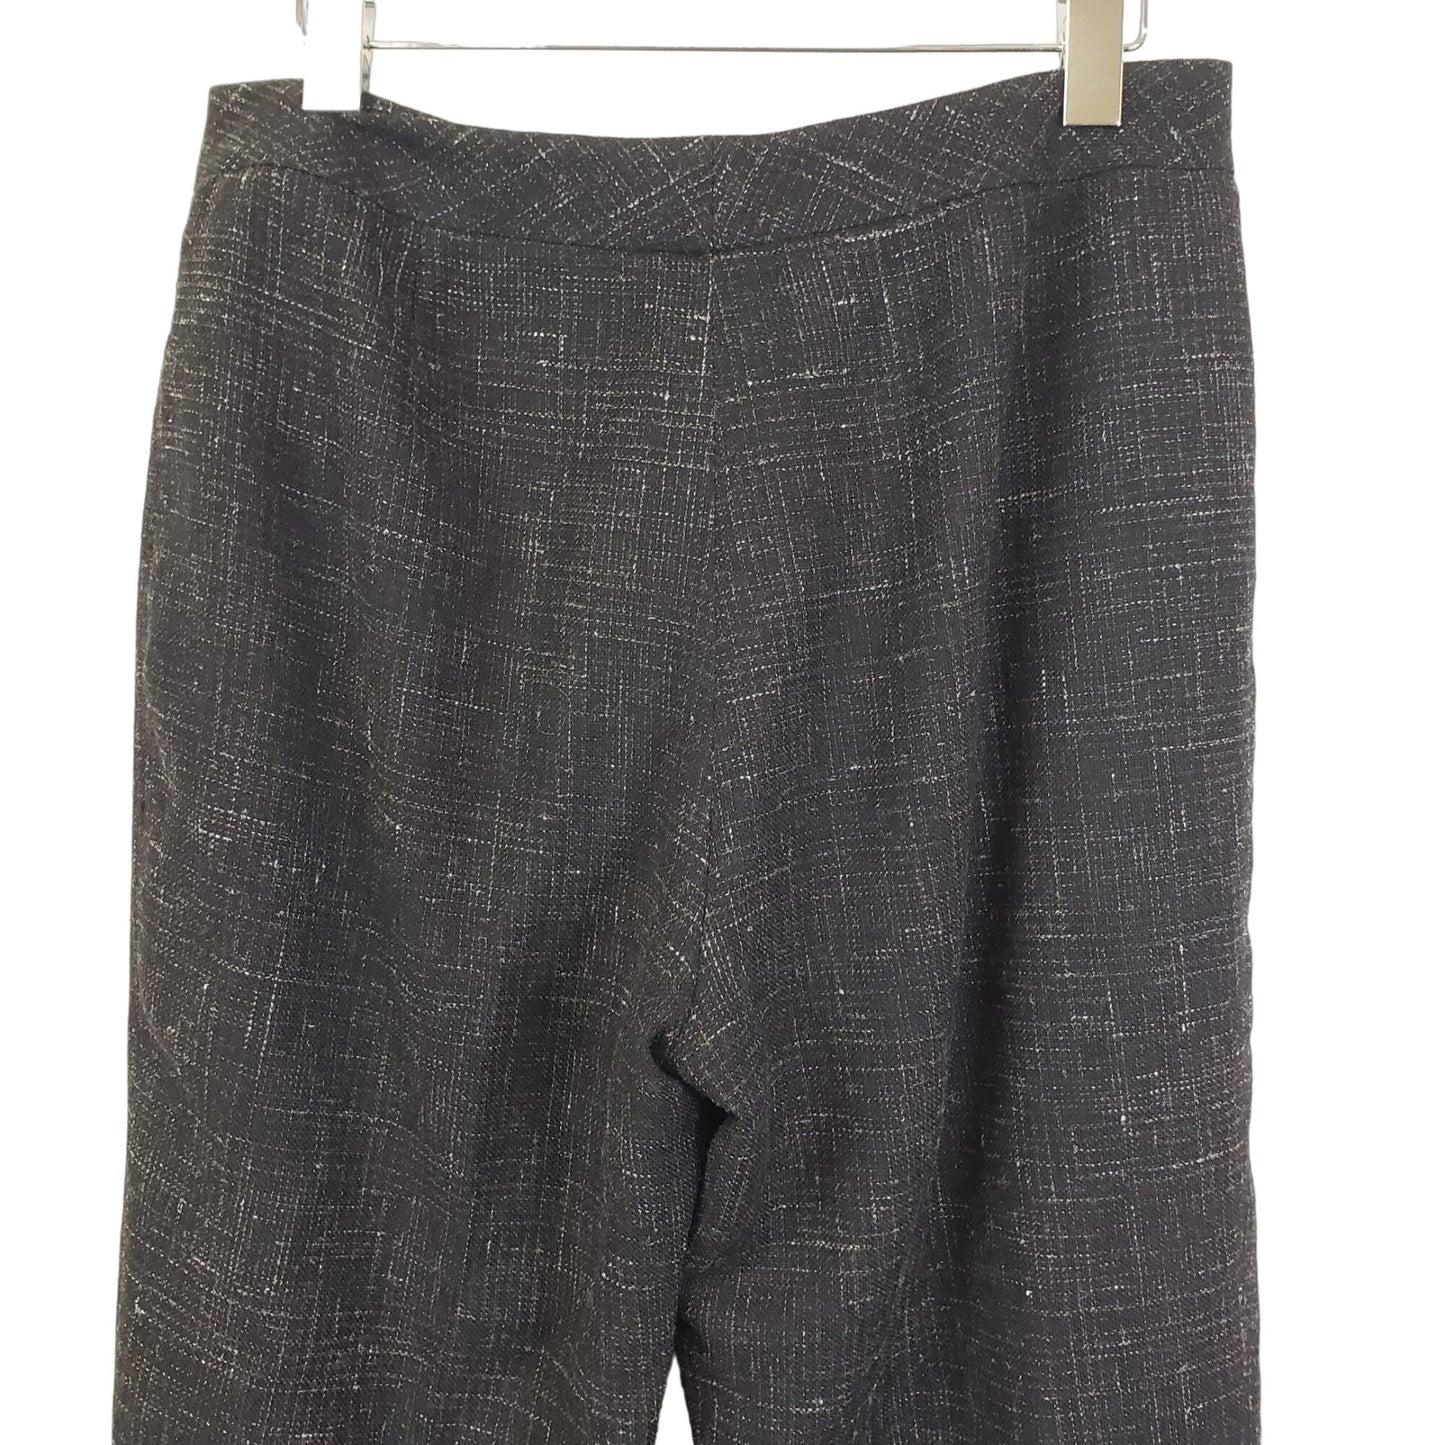 Lafayette 148 New York Wool & Linen Blend Trouser Pants Size 8